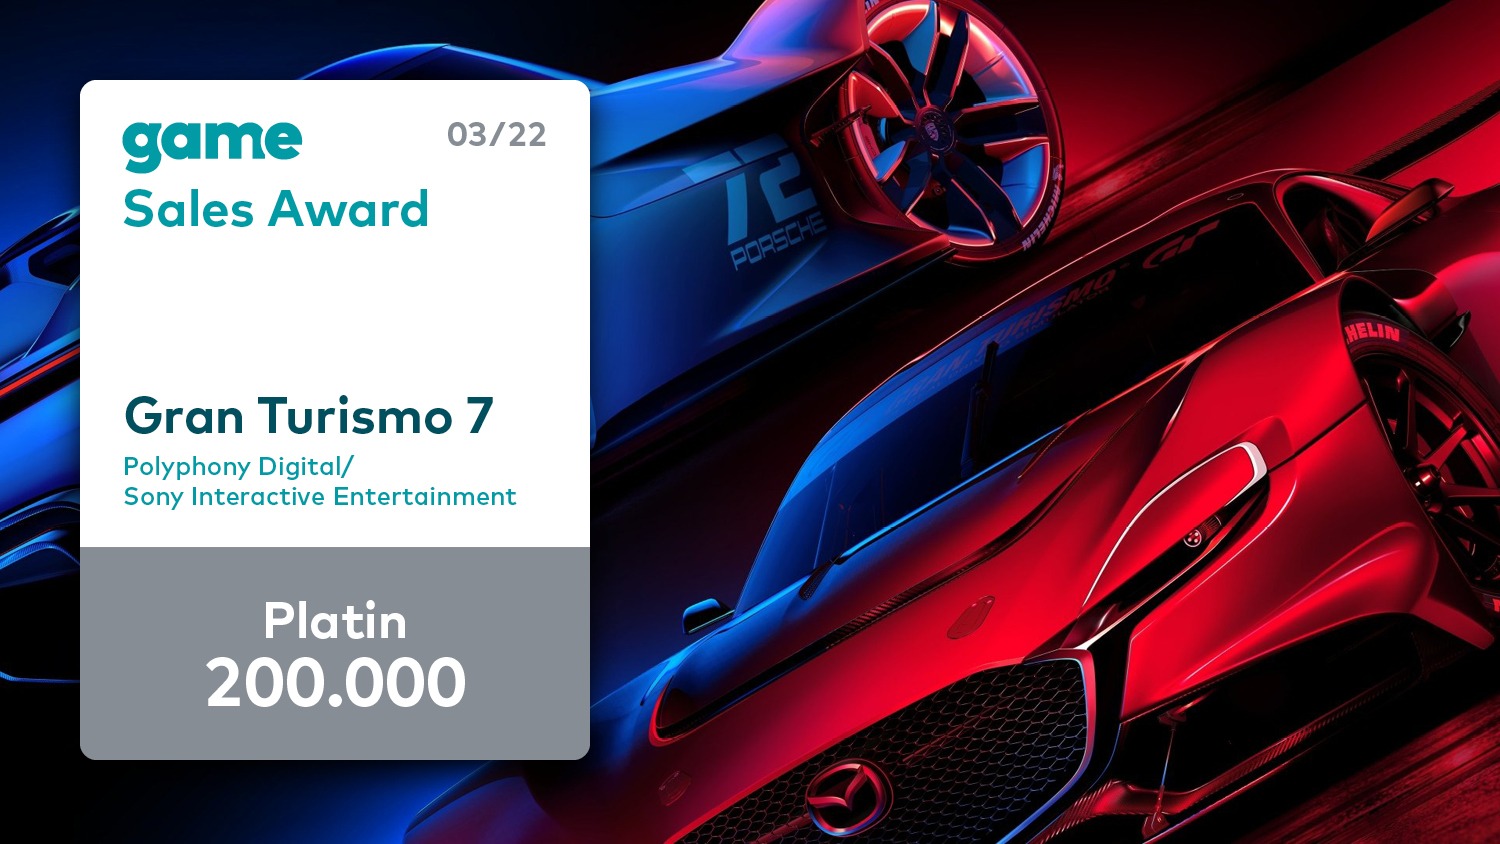 game_Sales_Award_2022-03_Visual_Website_Gran_Turismo_7_Platin_16x9.jpg